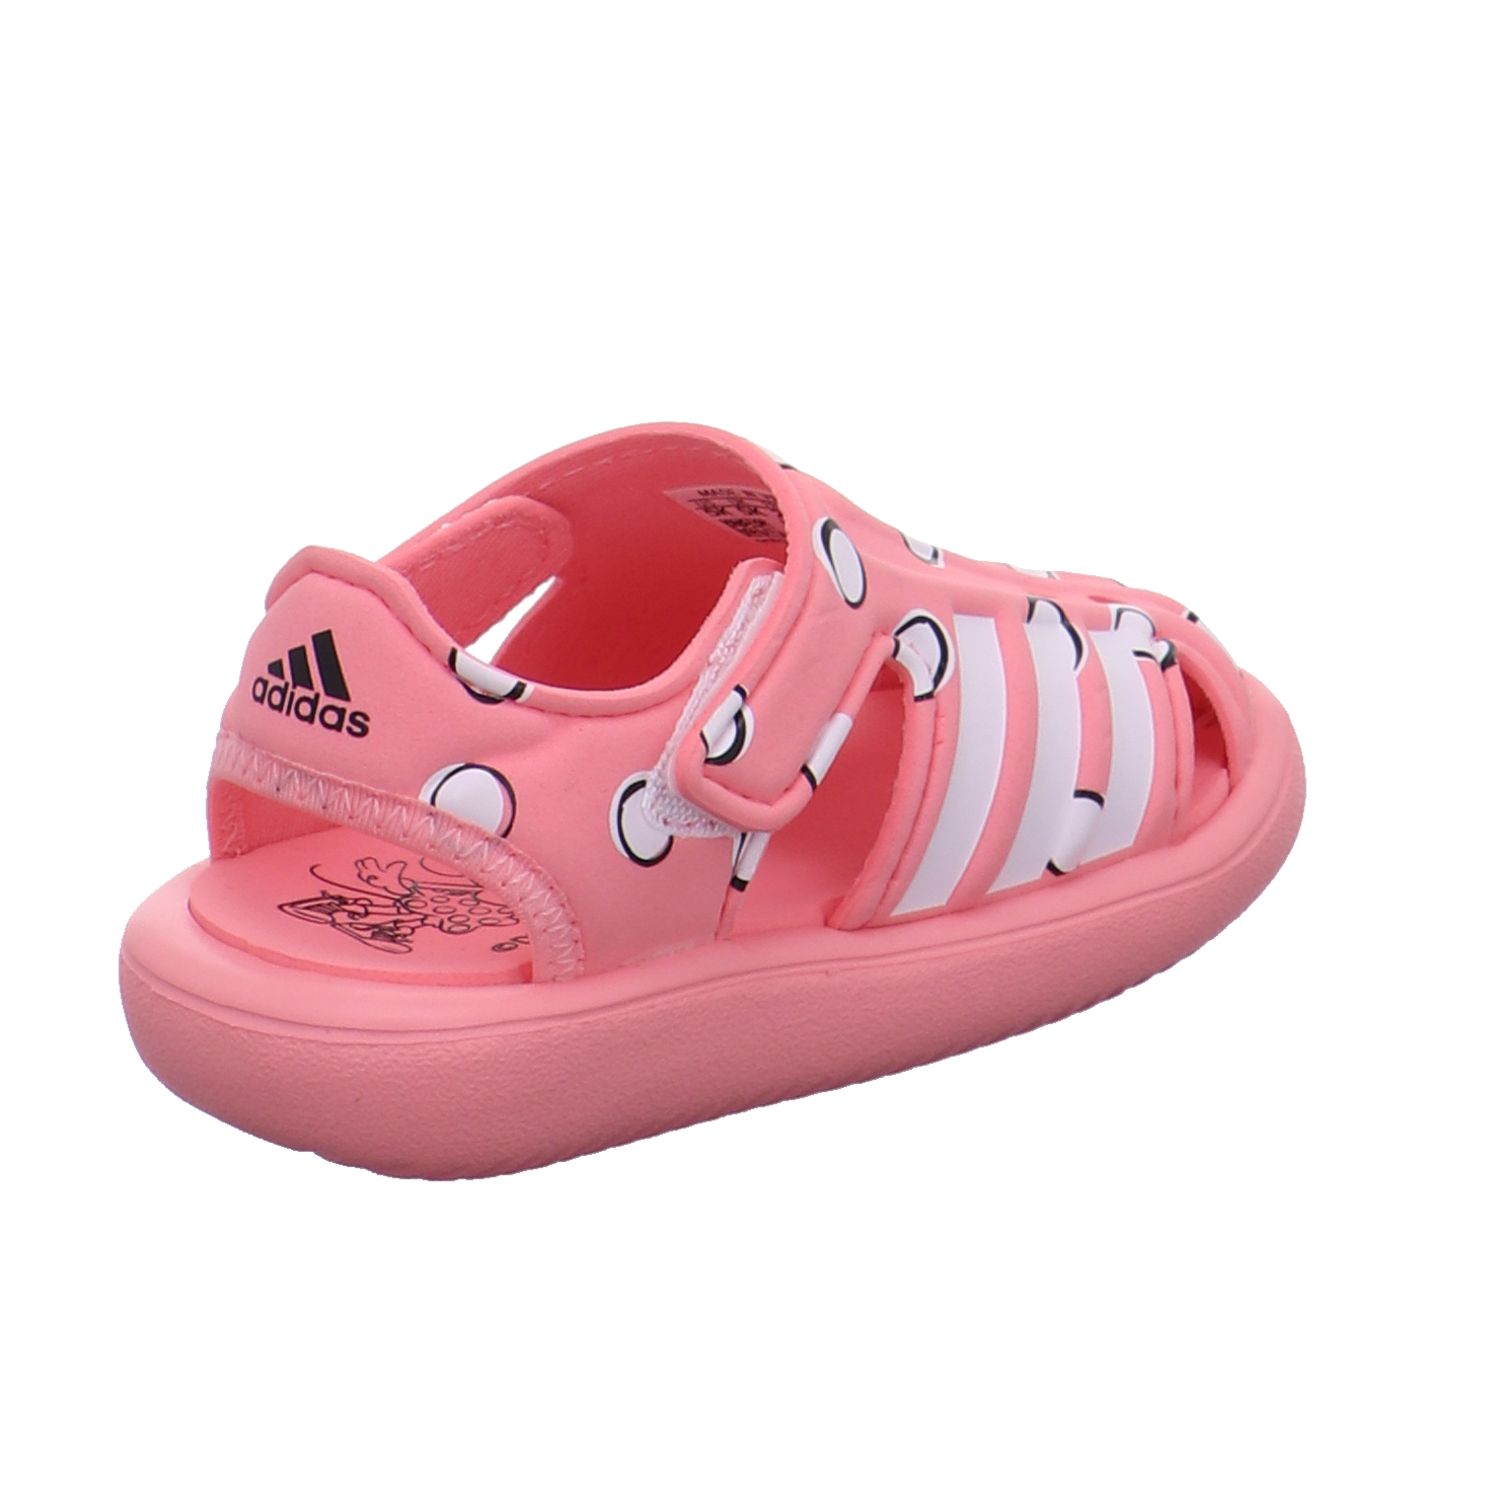 Adidas Schuhe  rose Bild5